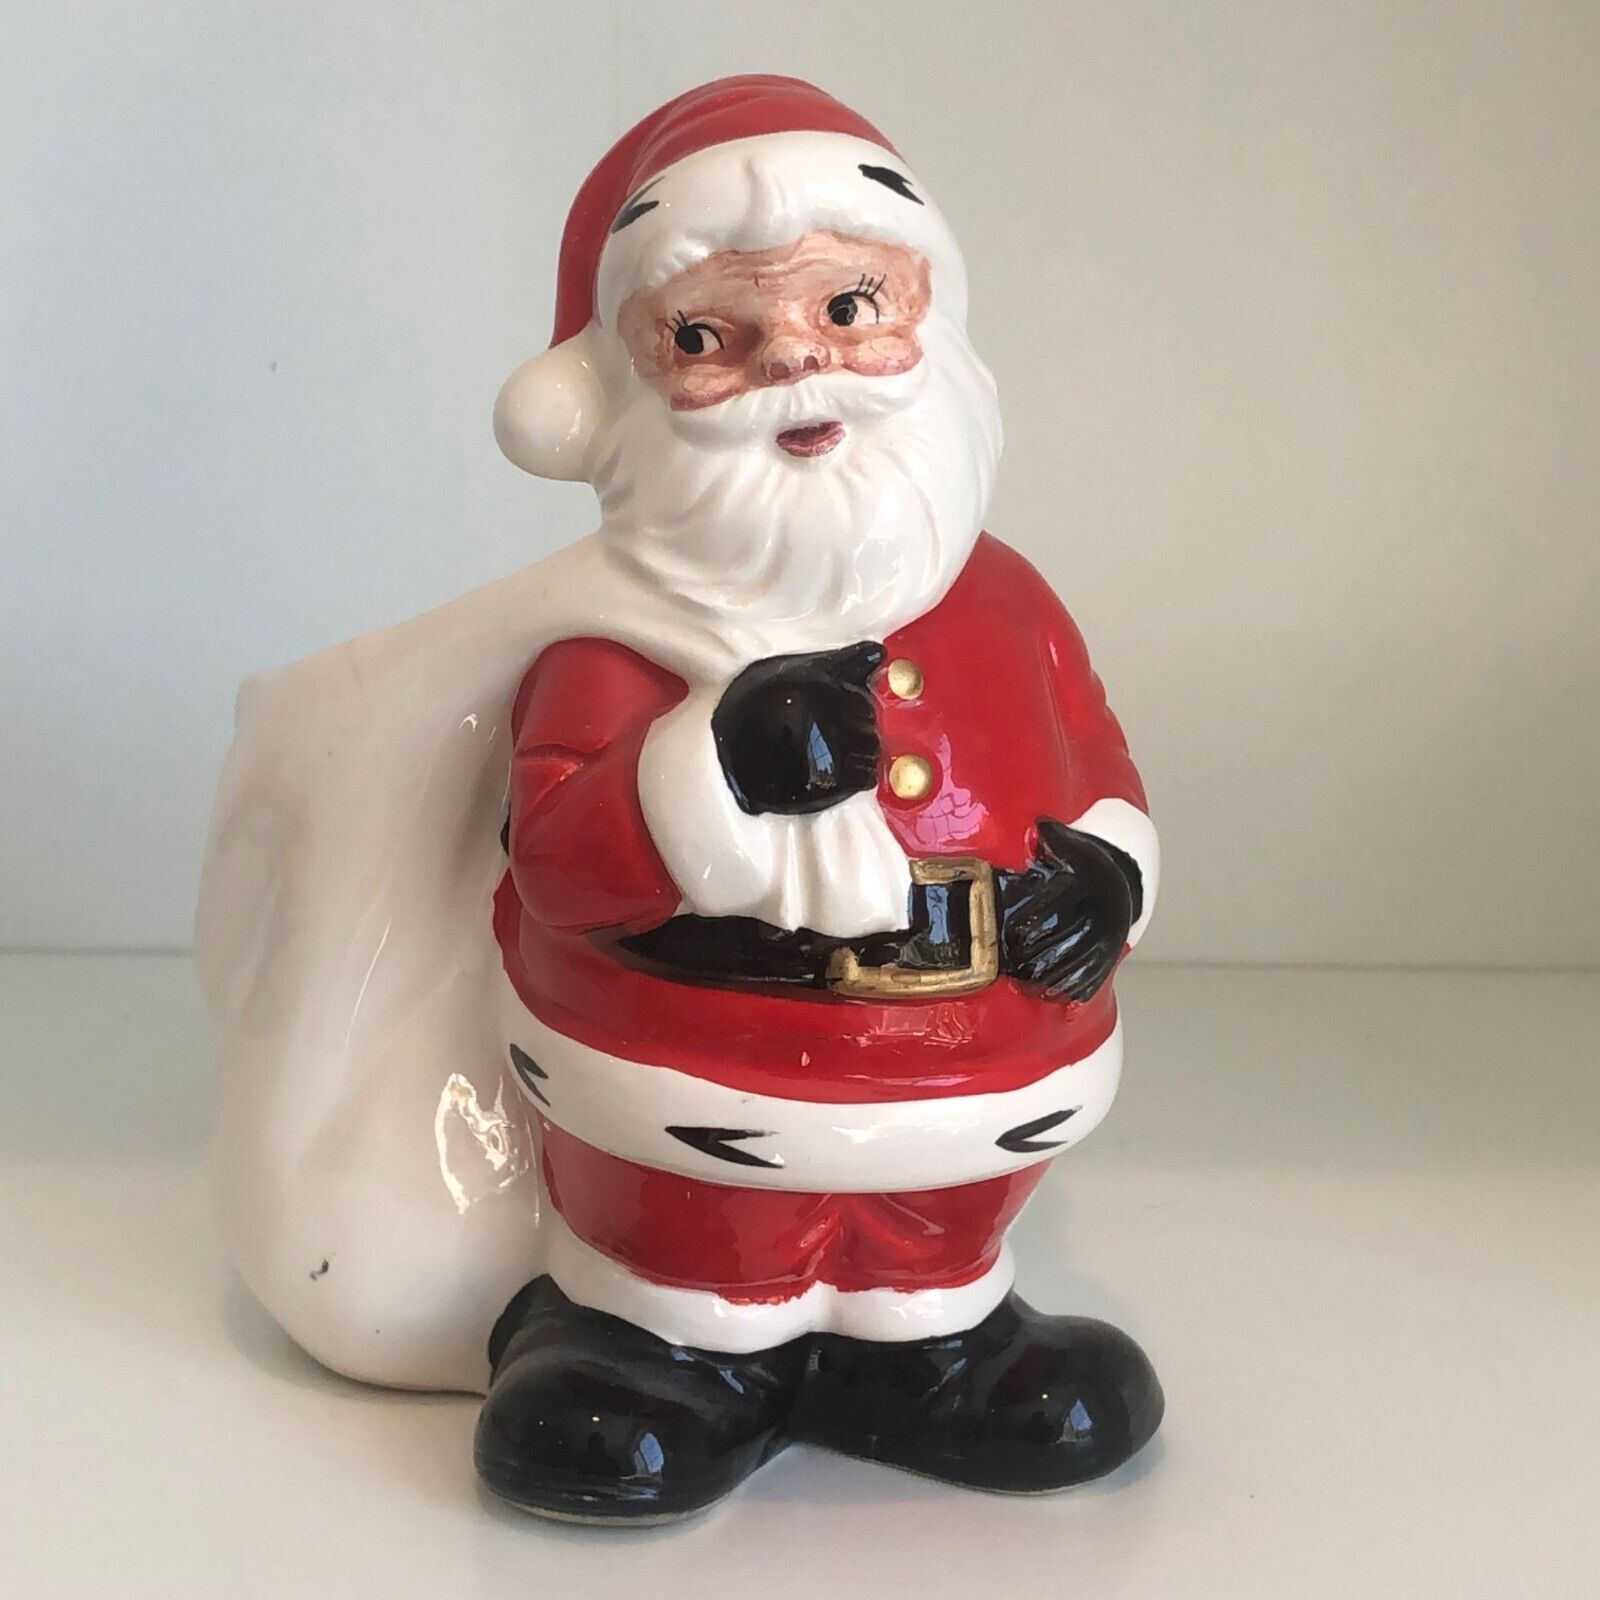 Vintage Santa Clause Planter by Inarco Japan 6.25